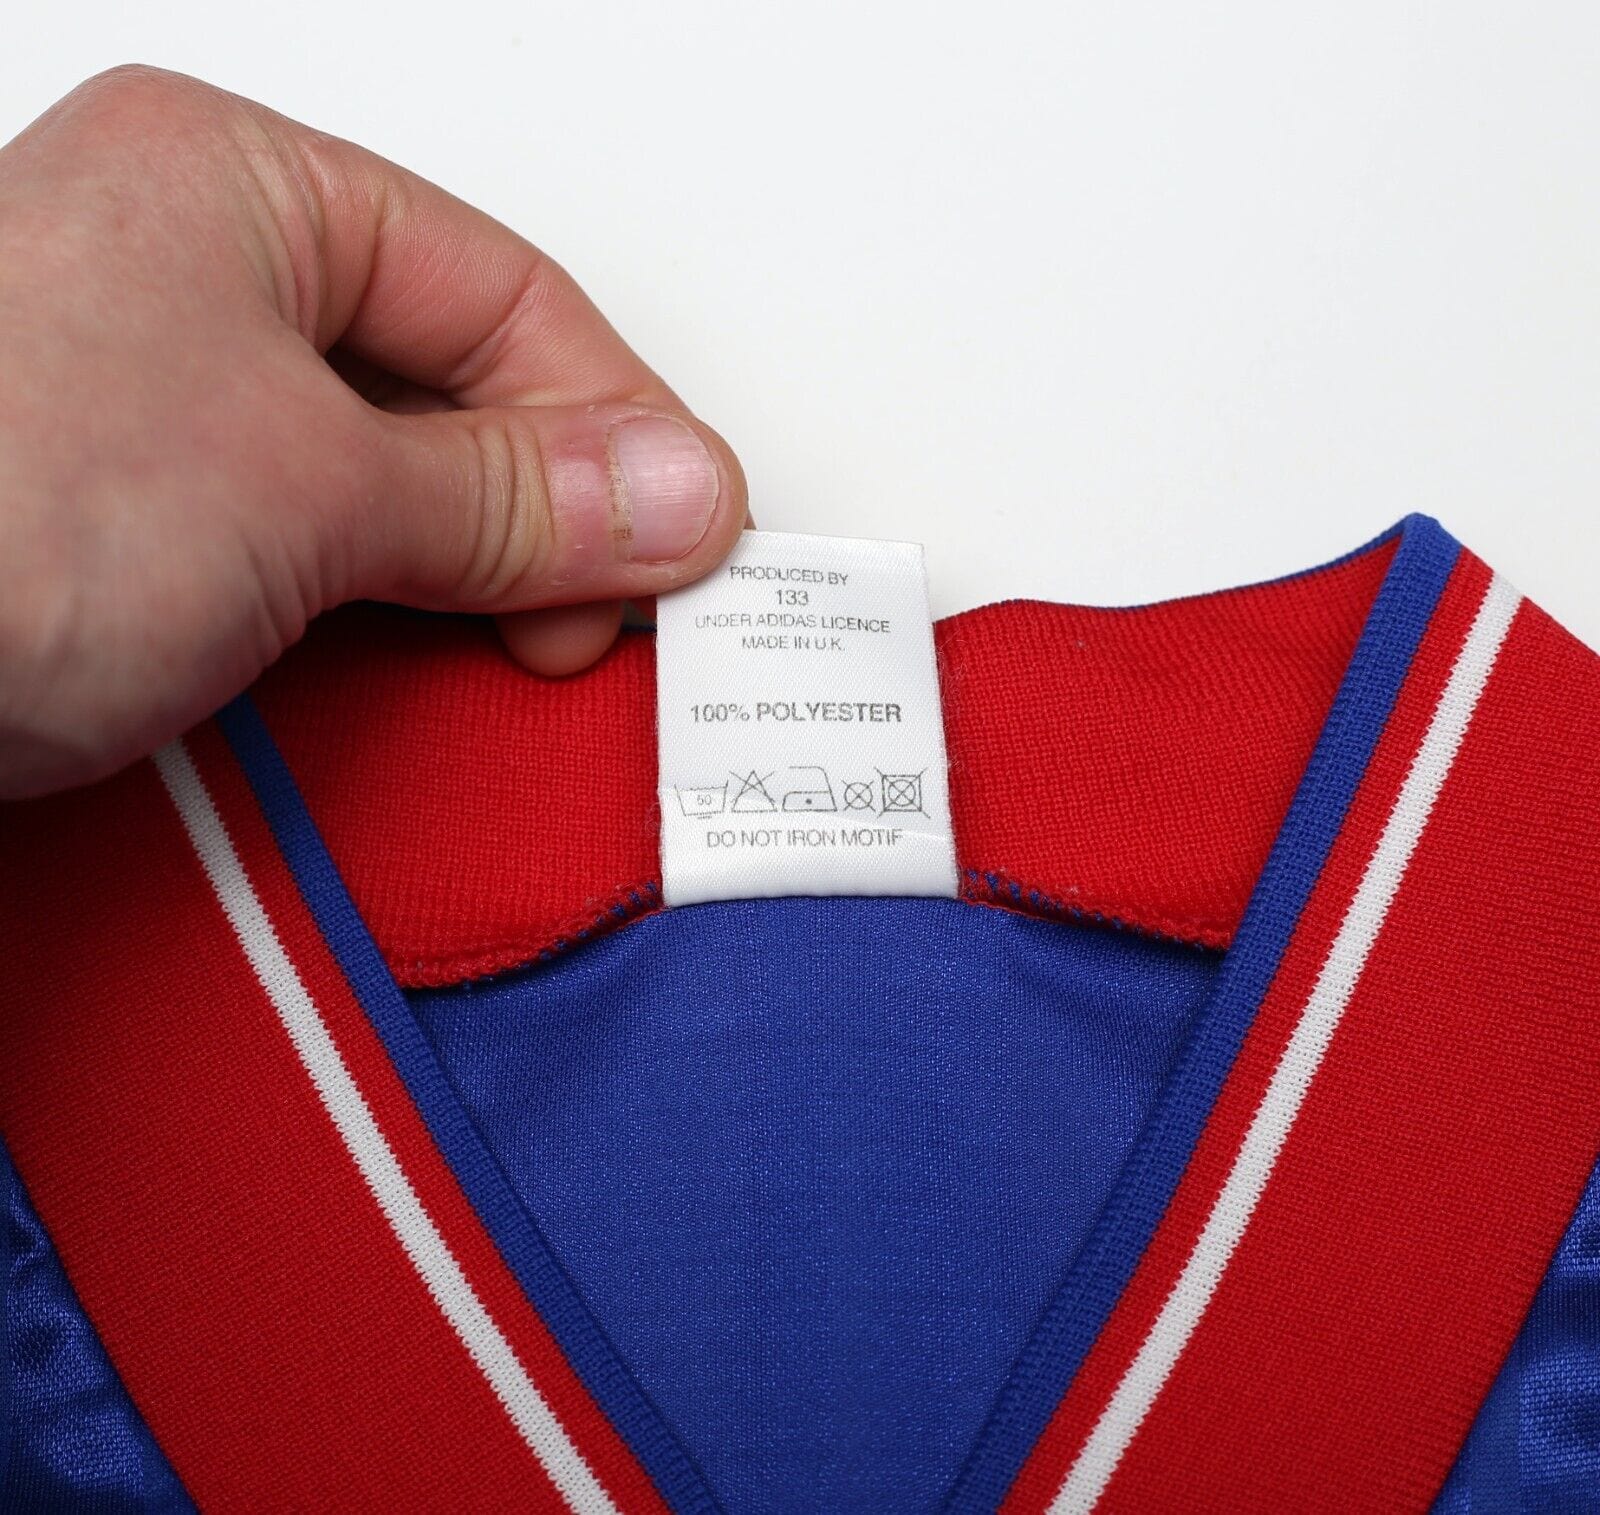 1992-1994 Glasgow Rangers Adidas Home Shirt #9 Ally McCoist - Marketplace, Classic Football Shirts, Vintage Football Shirts, Rare Soccer Shirts, Worldwide Delivery, 90's Football Shirts